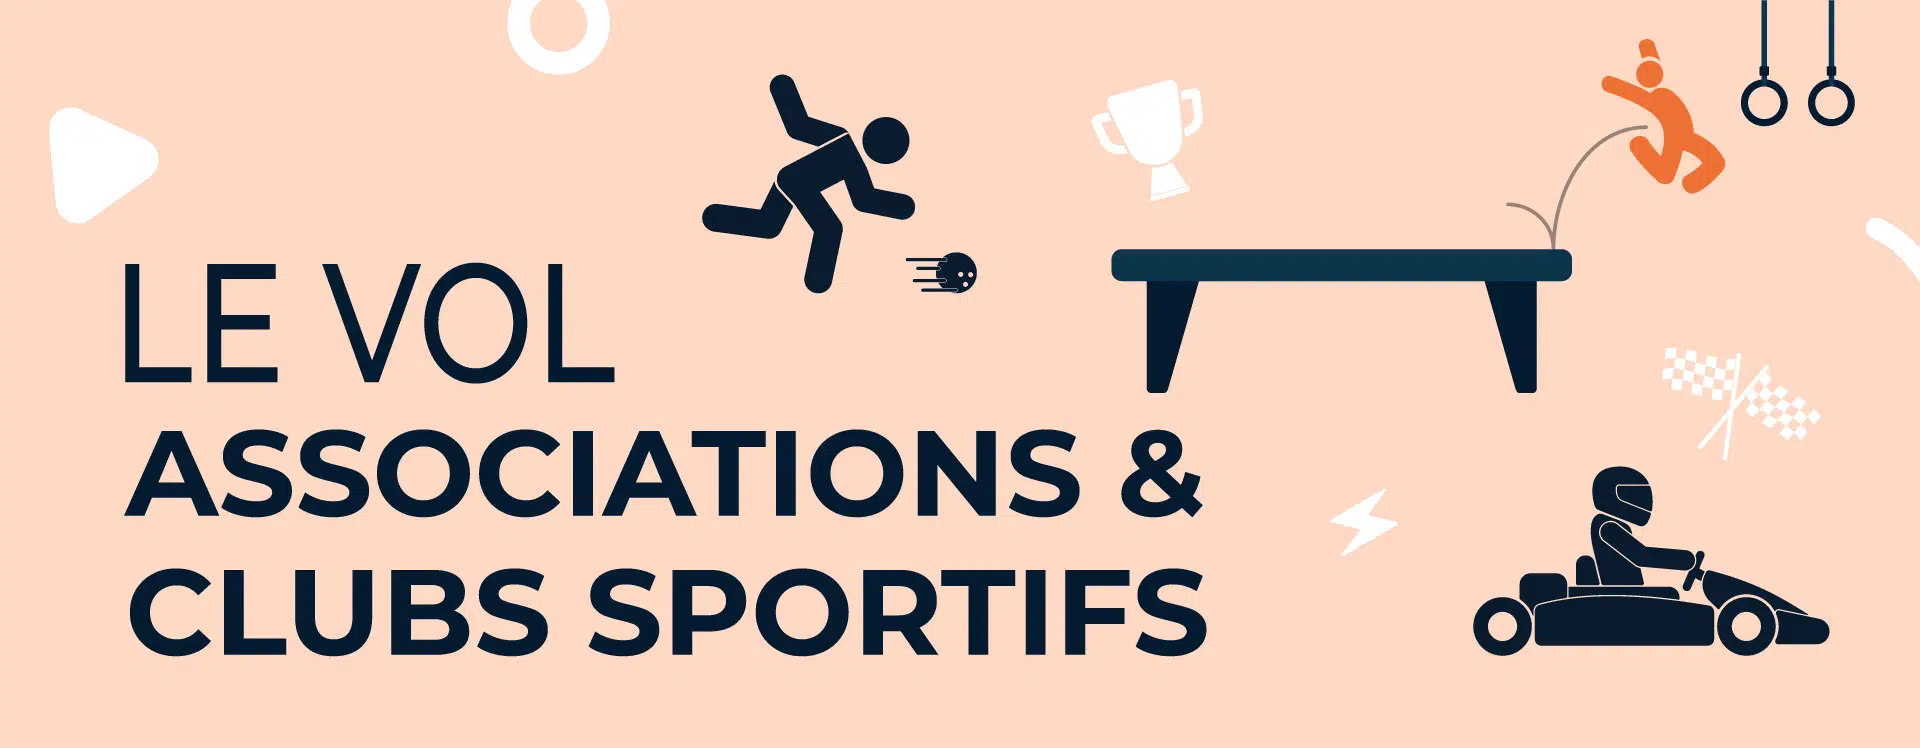 Le vol associations & clubs sportifs